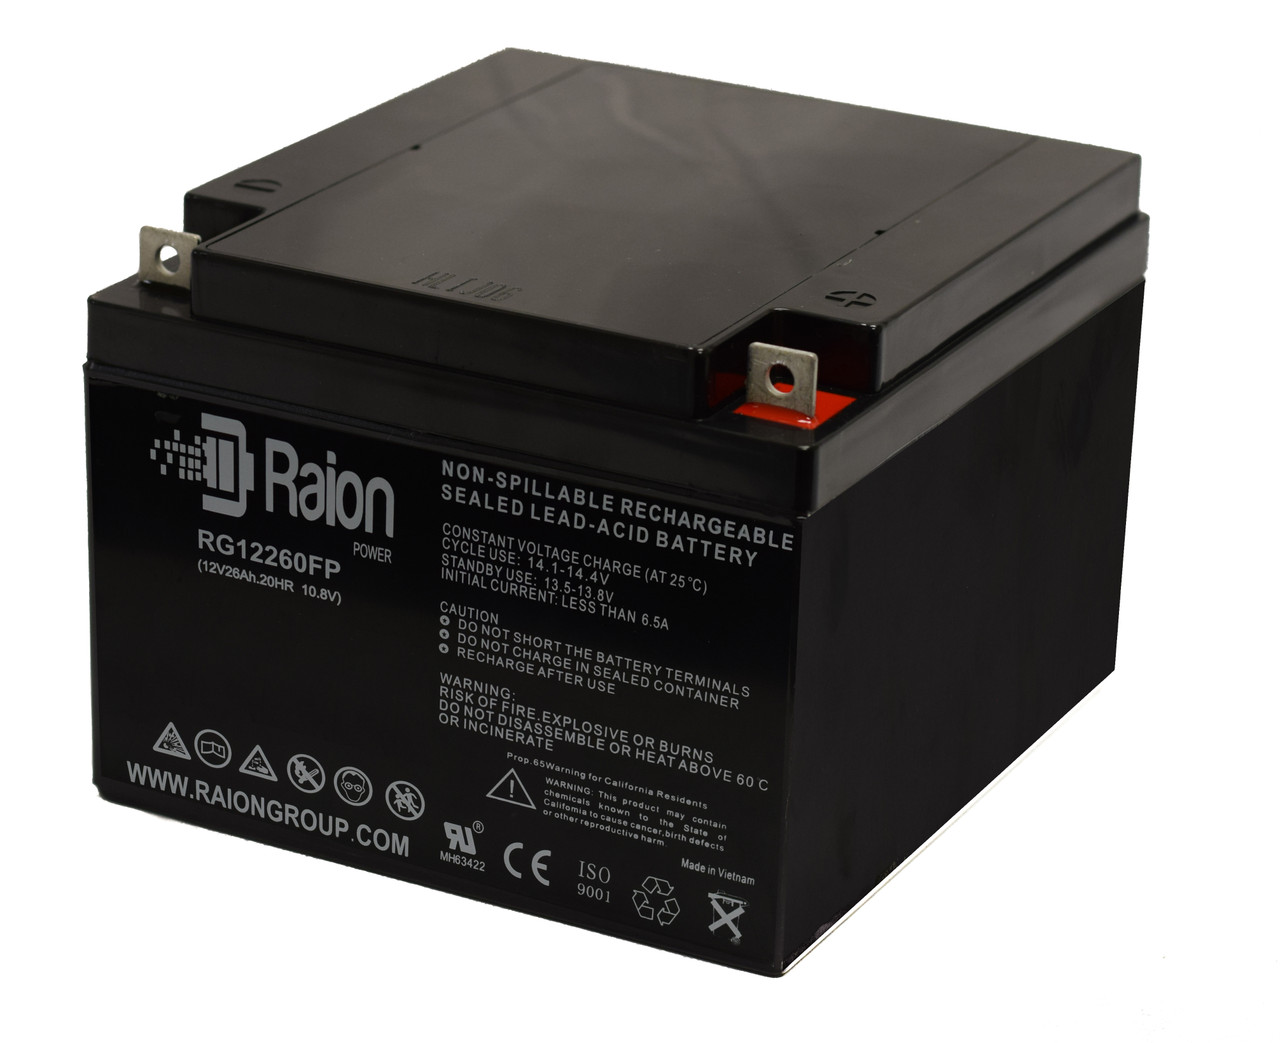 Raion Power Replacement 12V 26Ah Battery for Dewalt CMM750 Type 1 Lawn Mower - 1 Pack